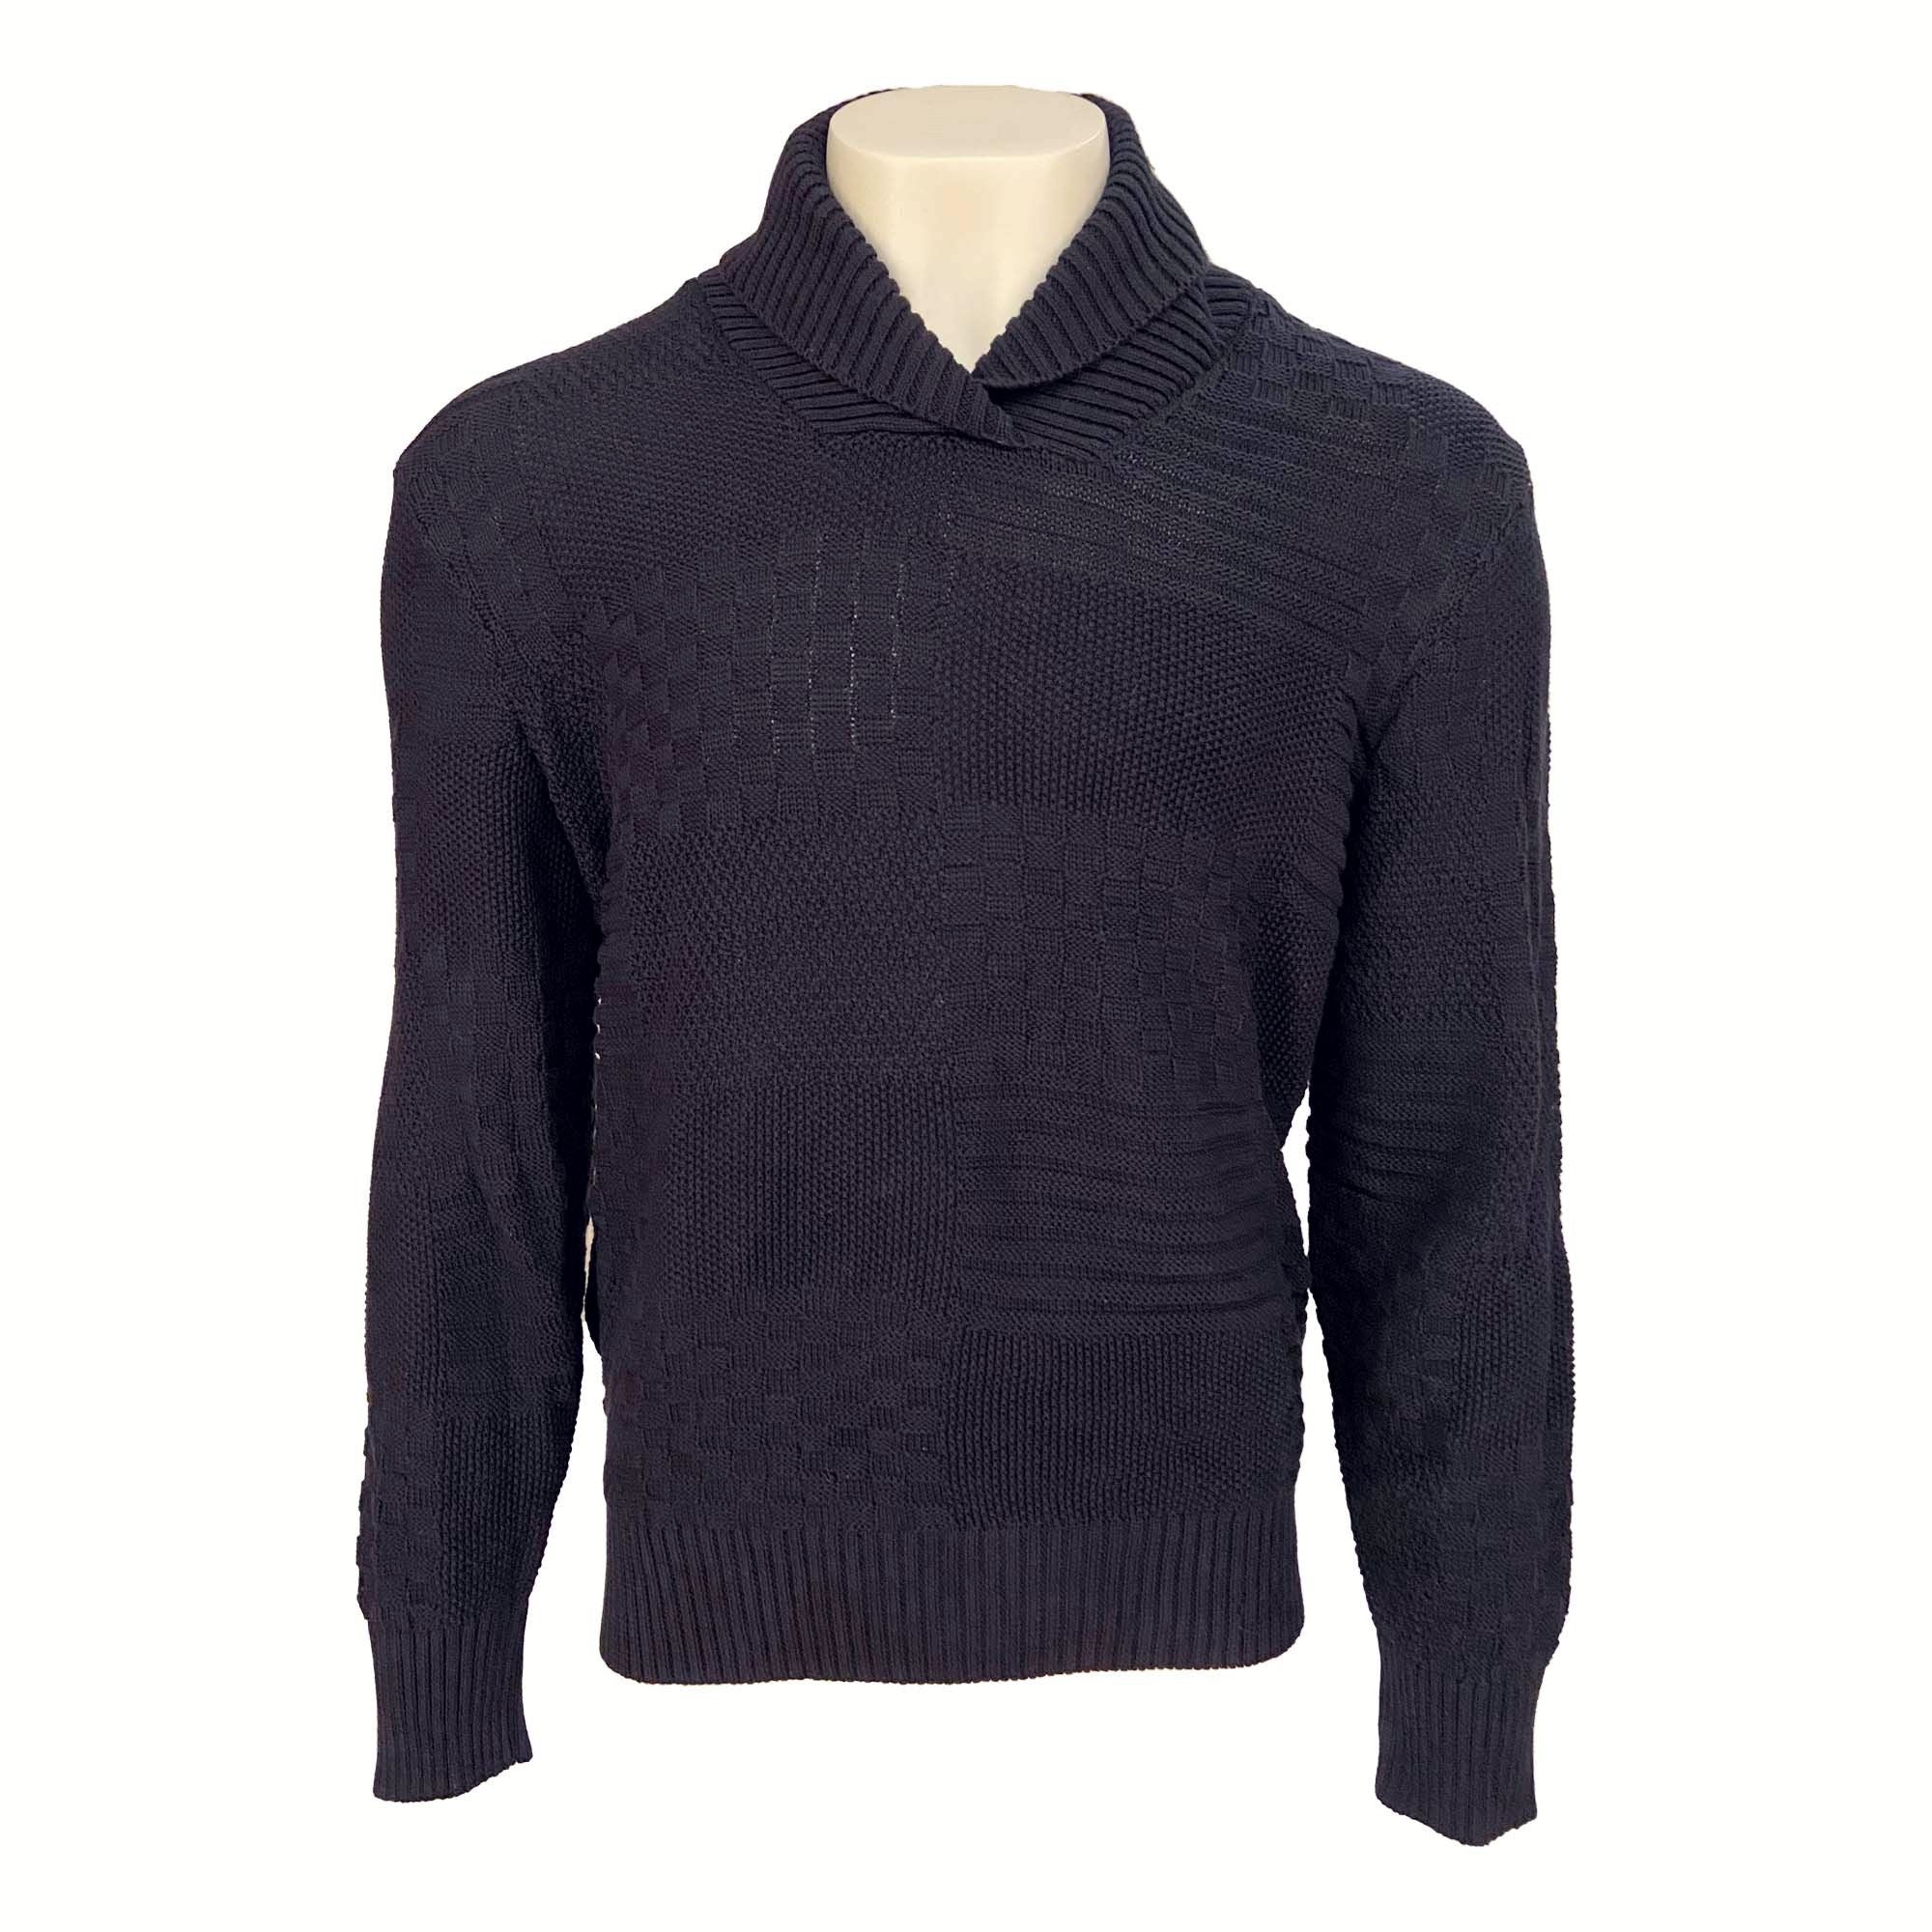 Cotton Blend Textured Shawl Collar Sweater in Navy by Viyella